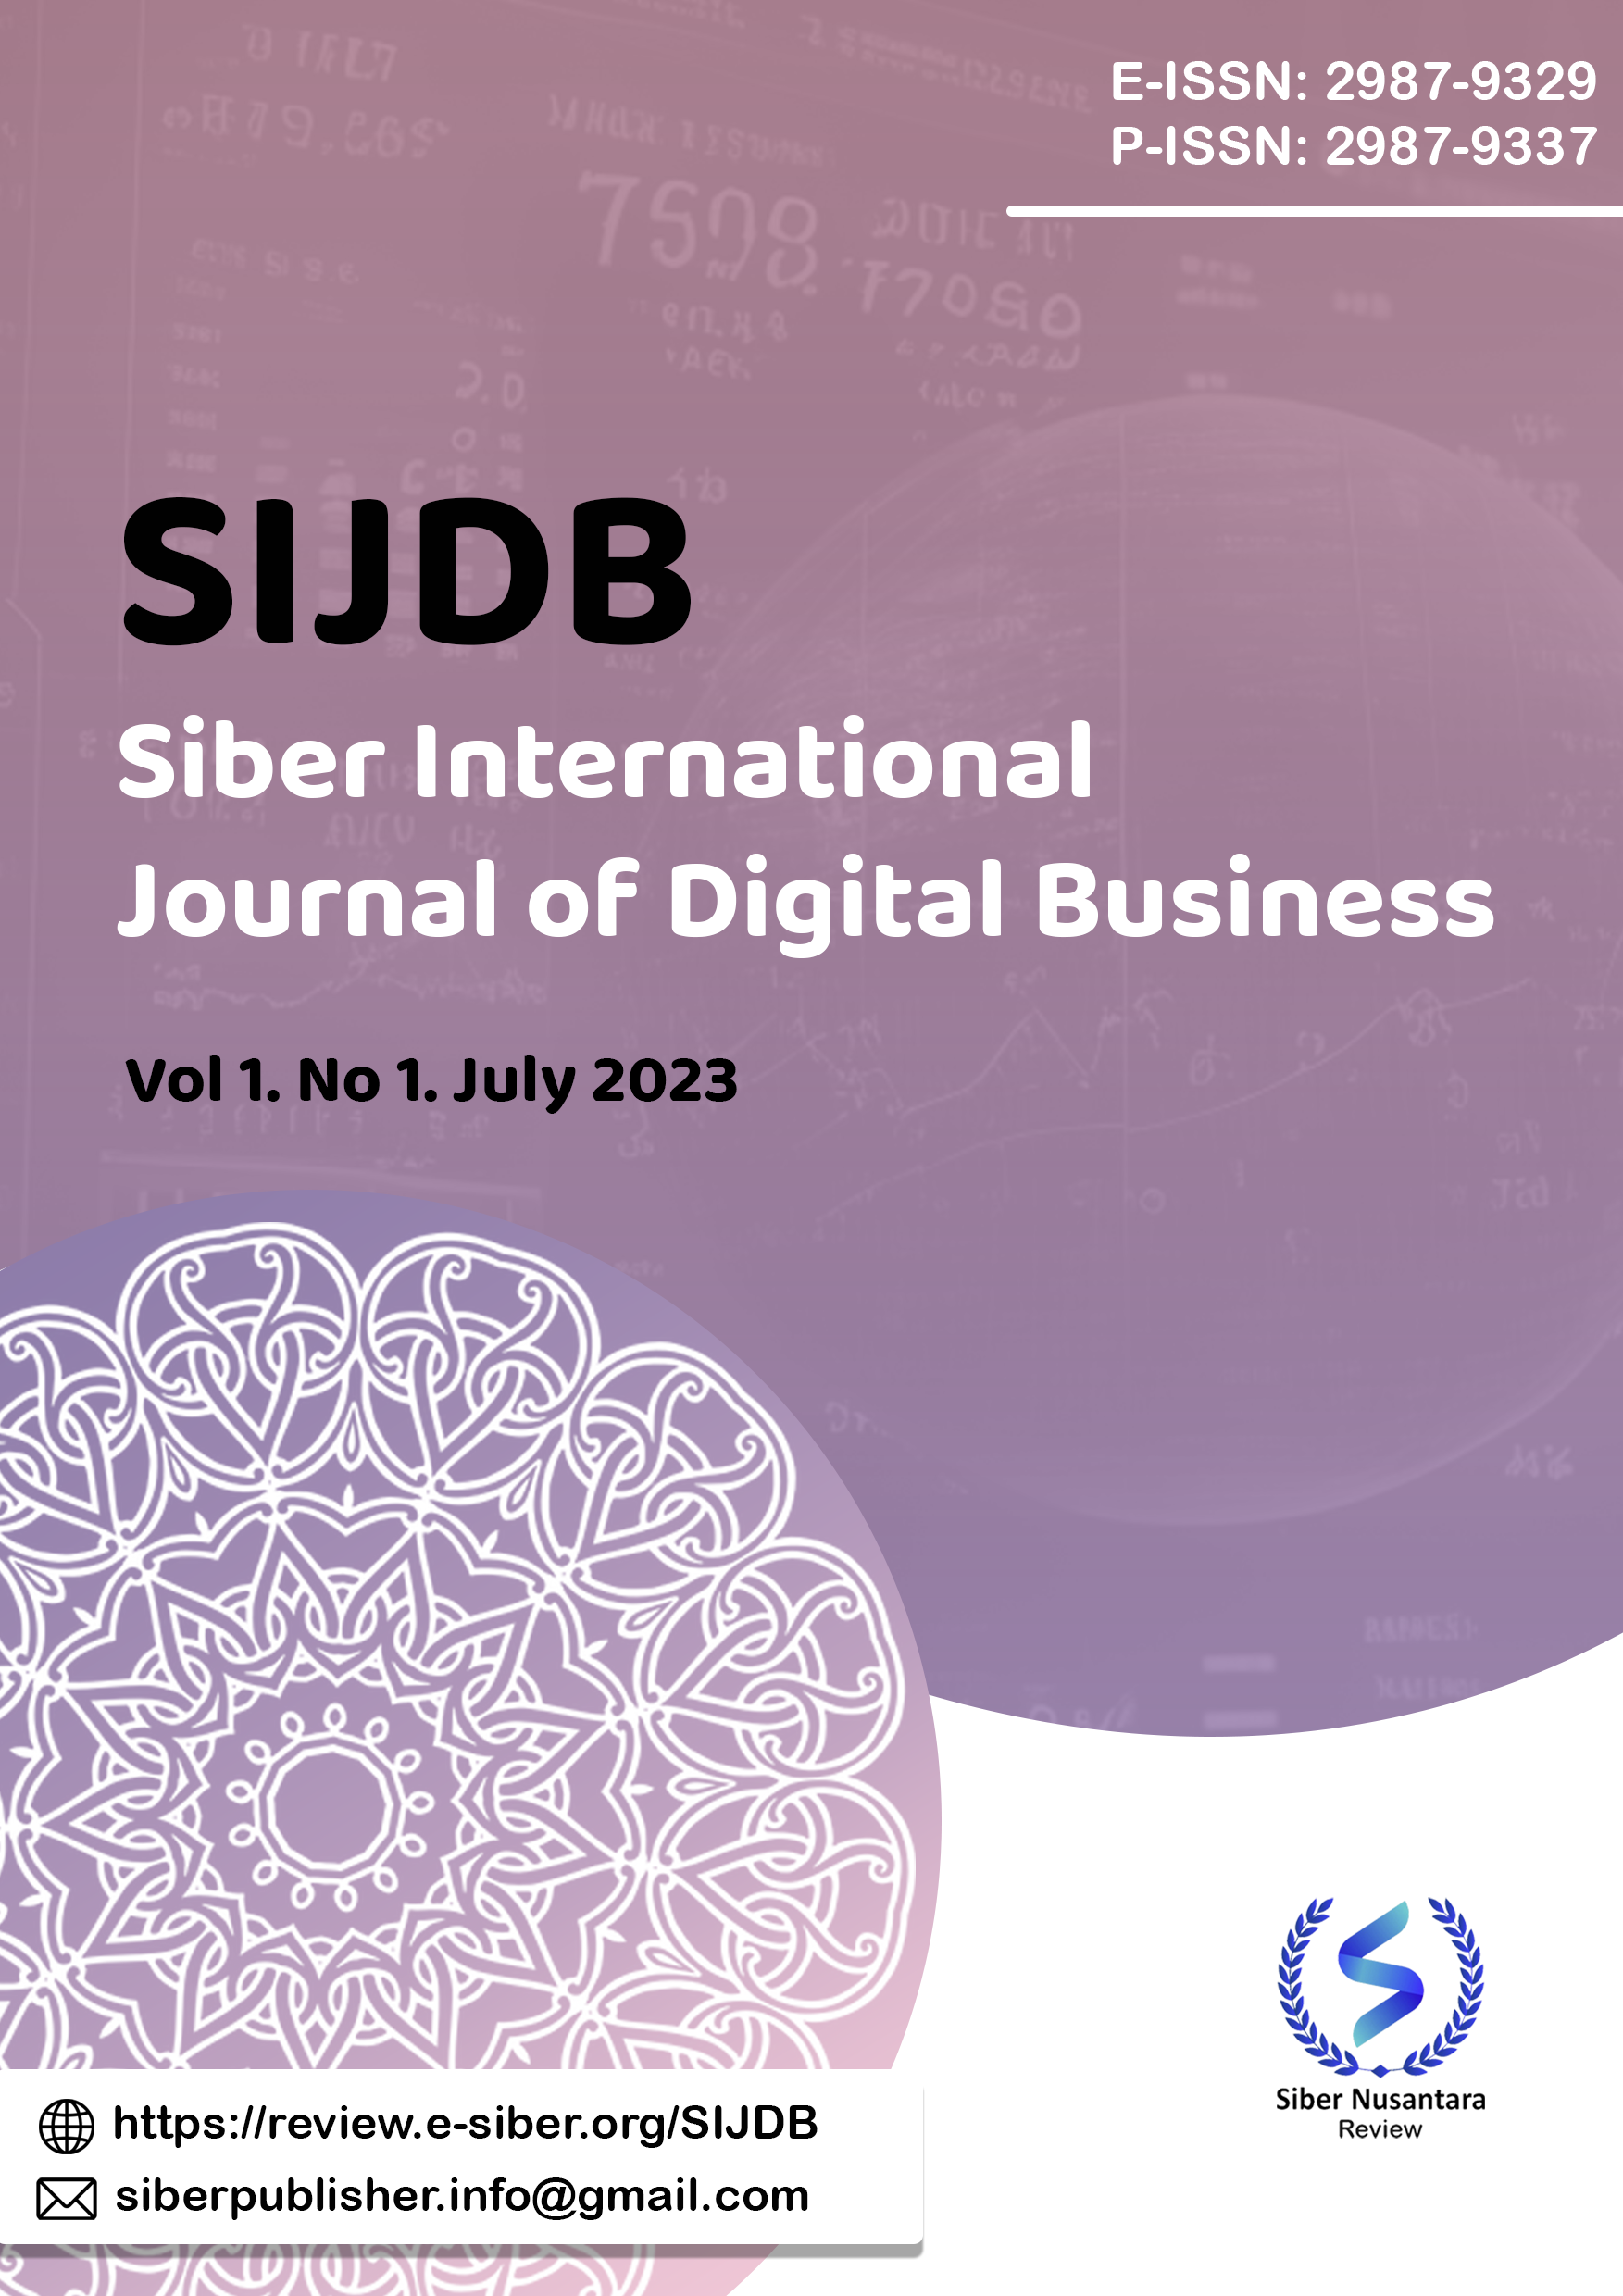 					View Vol. 1 No. 1 (2023): (SIJDB) Siber International Journal of Digital Business (July 2023)
				